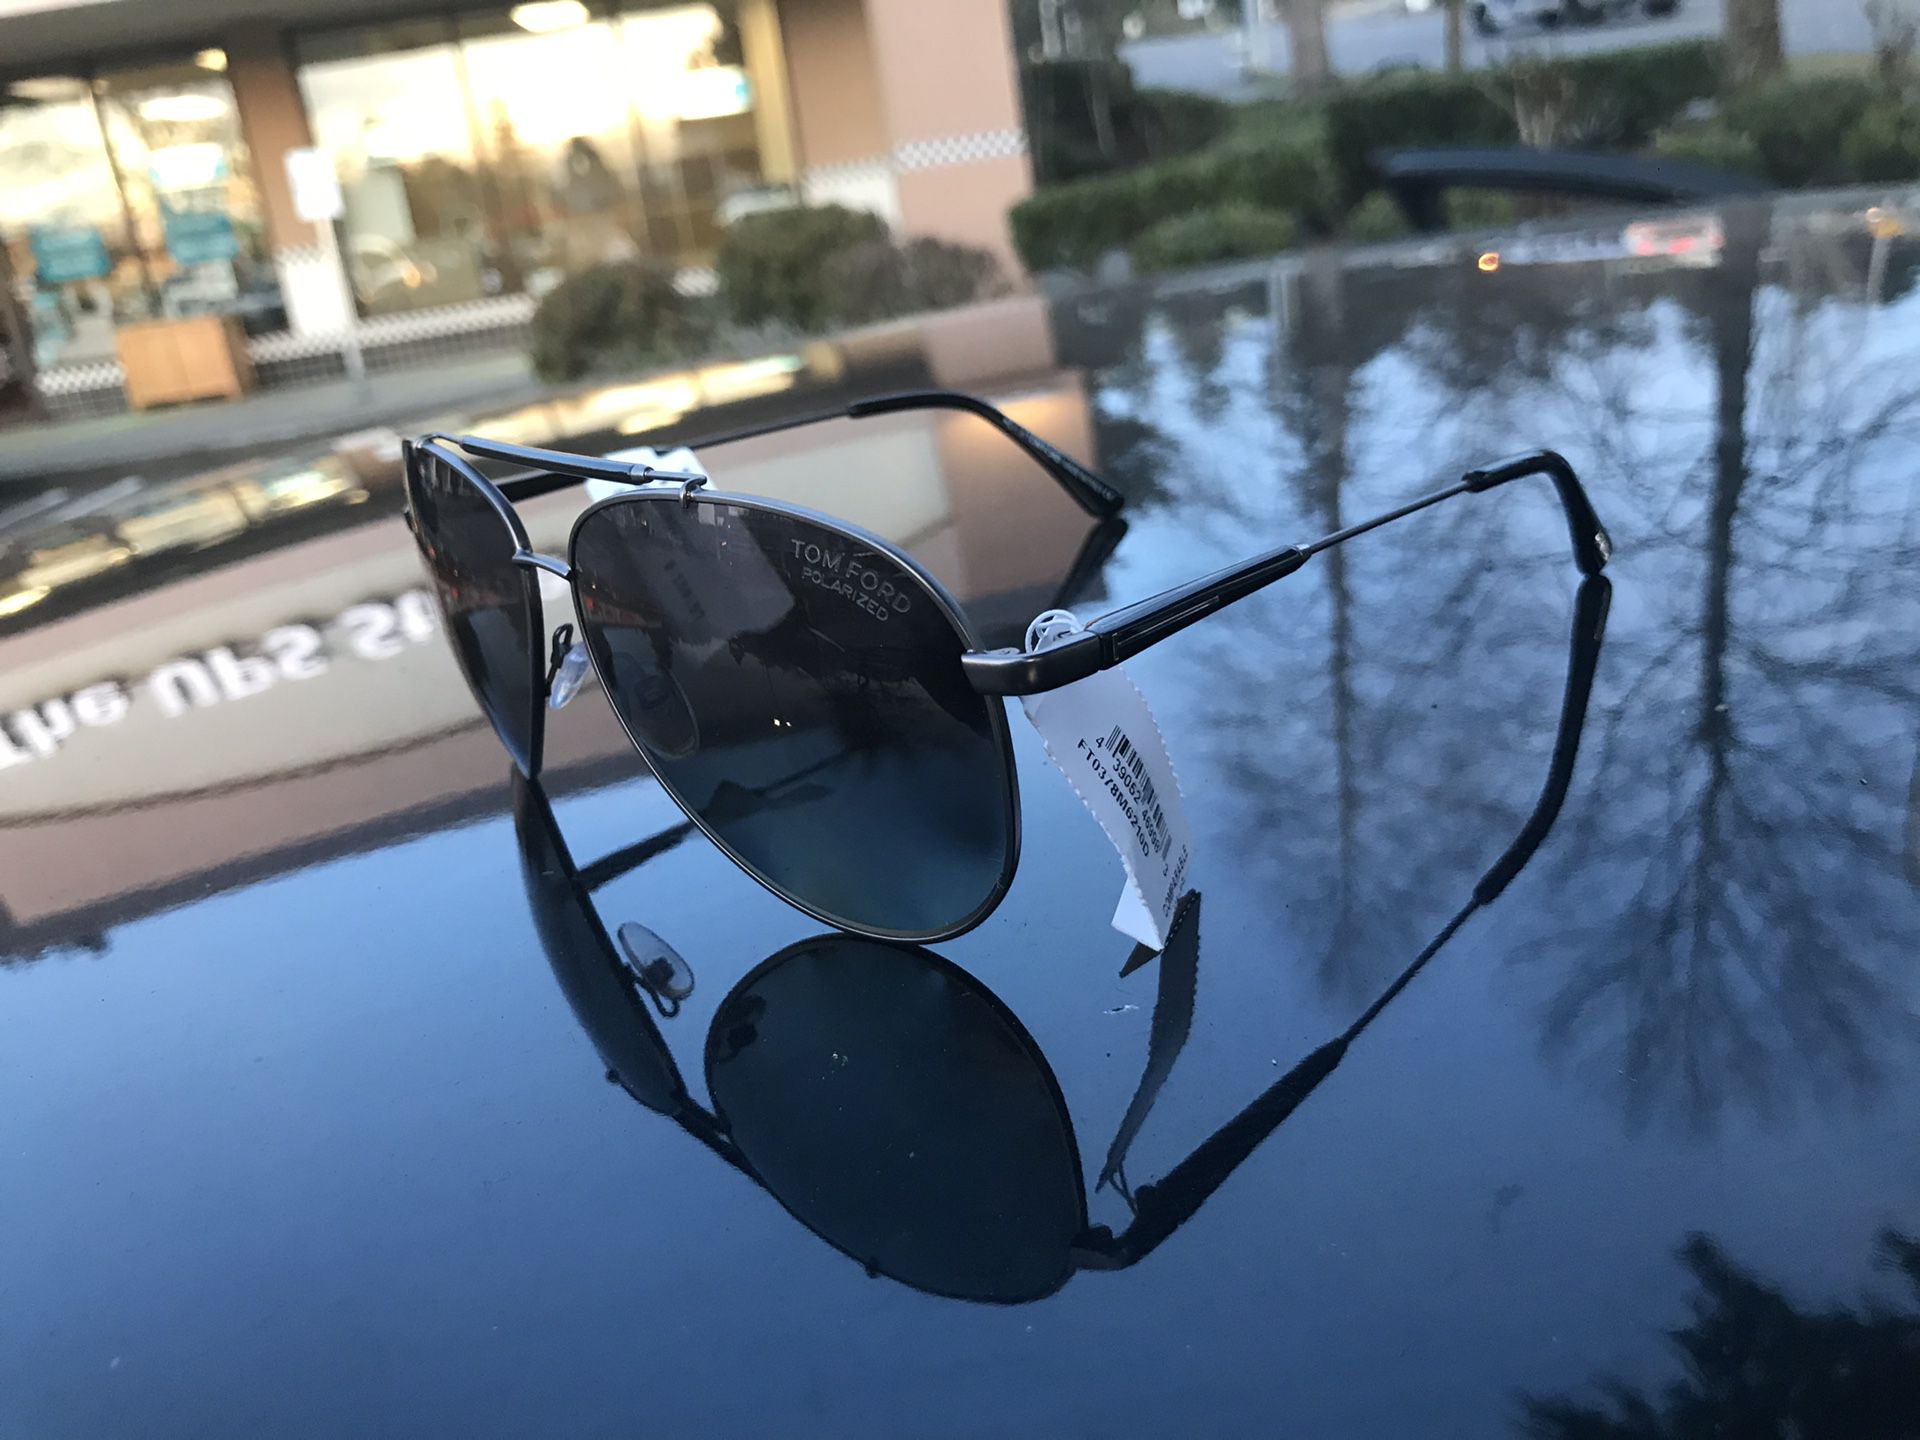 Brand new Tom fords. 455$ sunglasses